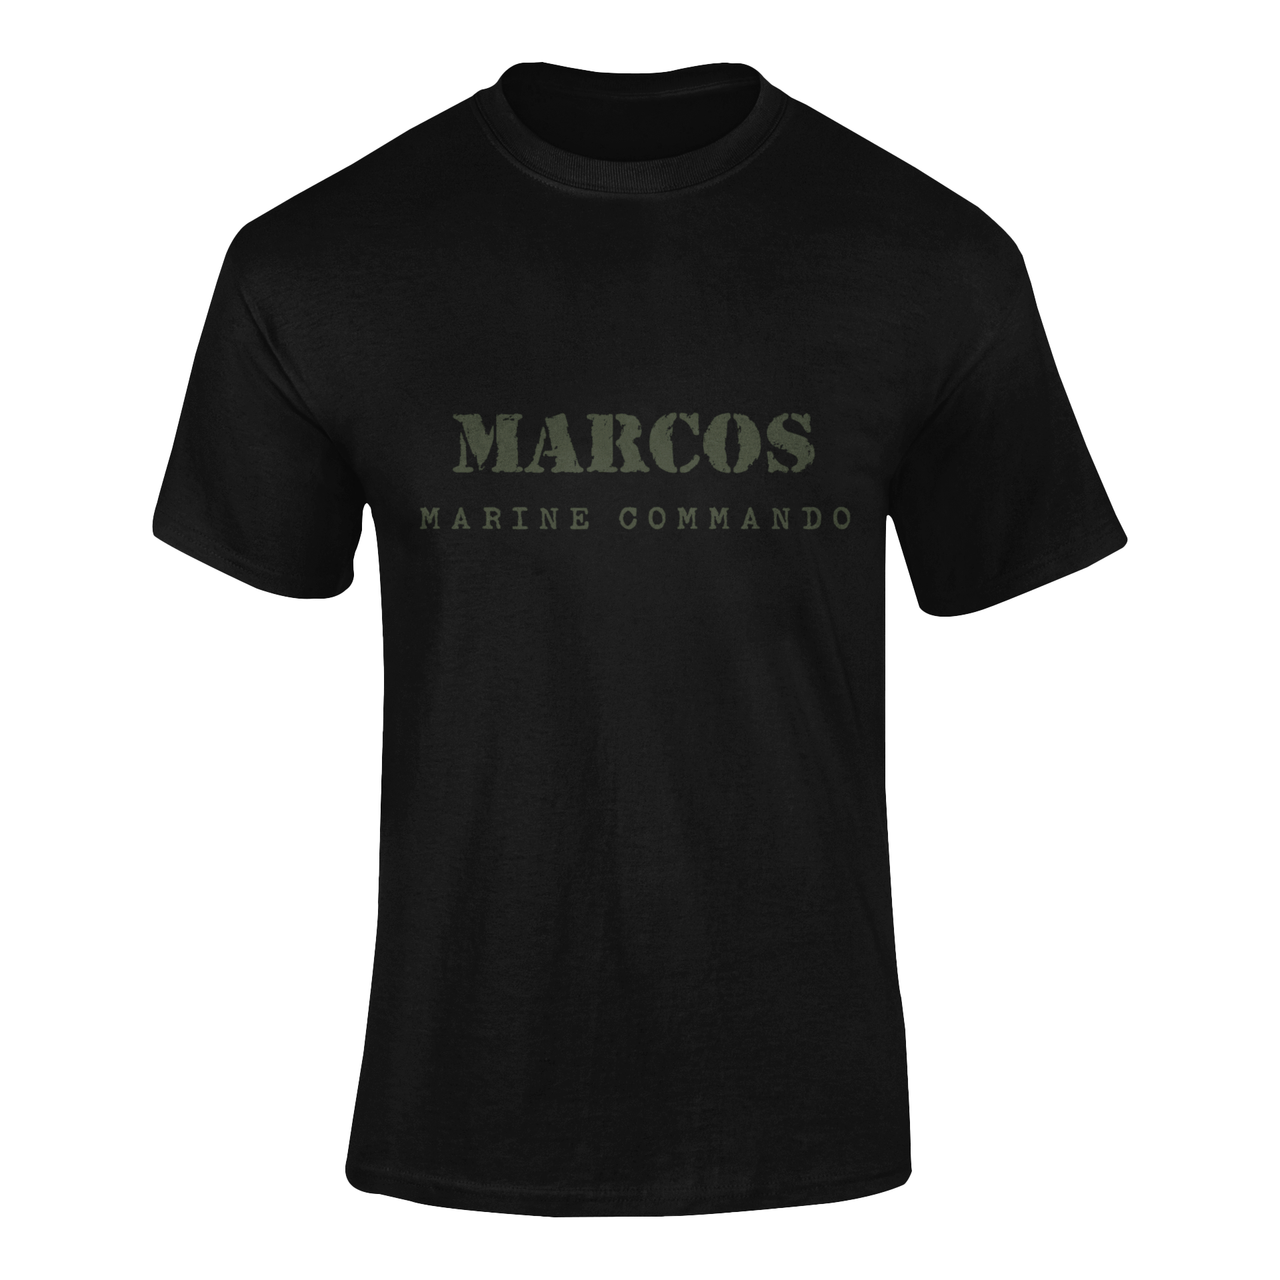 Navy T-shirt - Marcos - Marine Commando (Men)